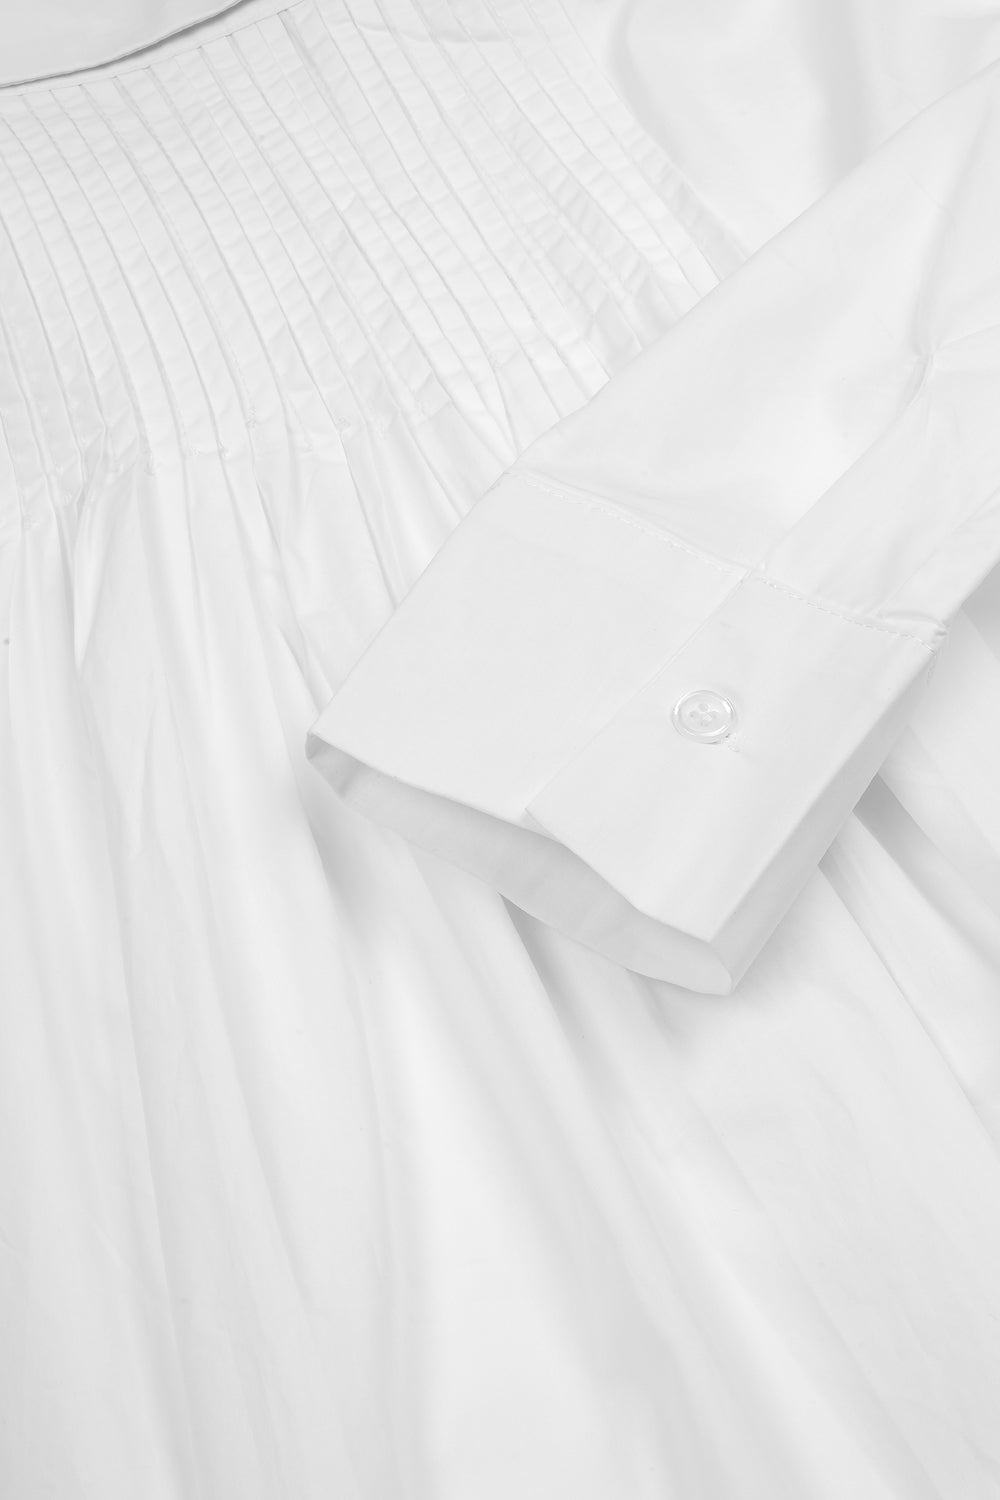 Cotton Pin Tuck Shirt Dress (White)